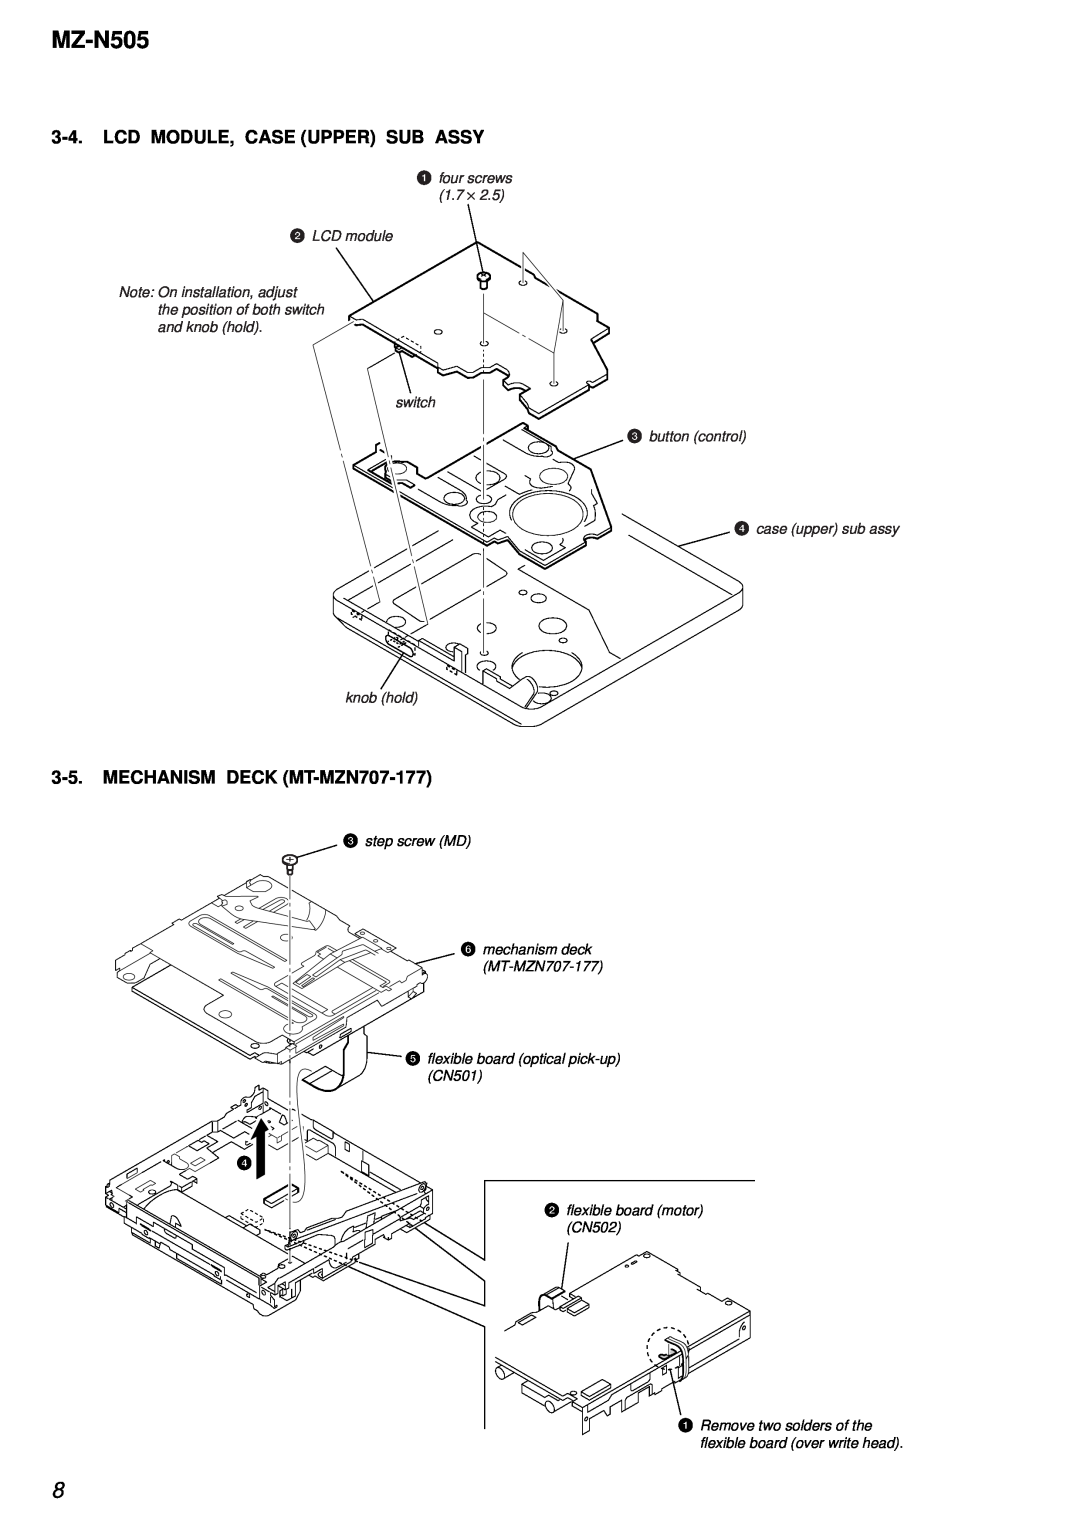 Sony MZ-N505 Lcd Module, Case Upper Sub Assy, MECHANISM DECK MT-MZN707-177, 1four screws 1.7 ⋅ 2LCD module, knob hold 